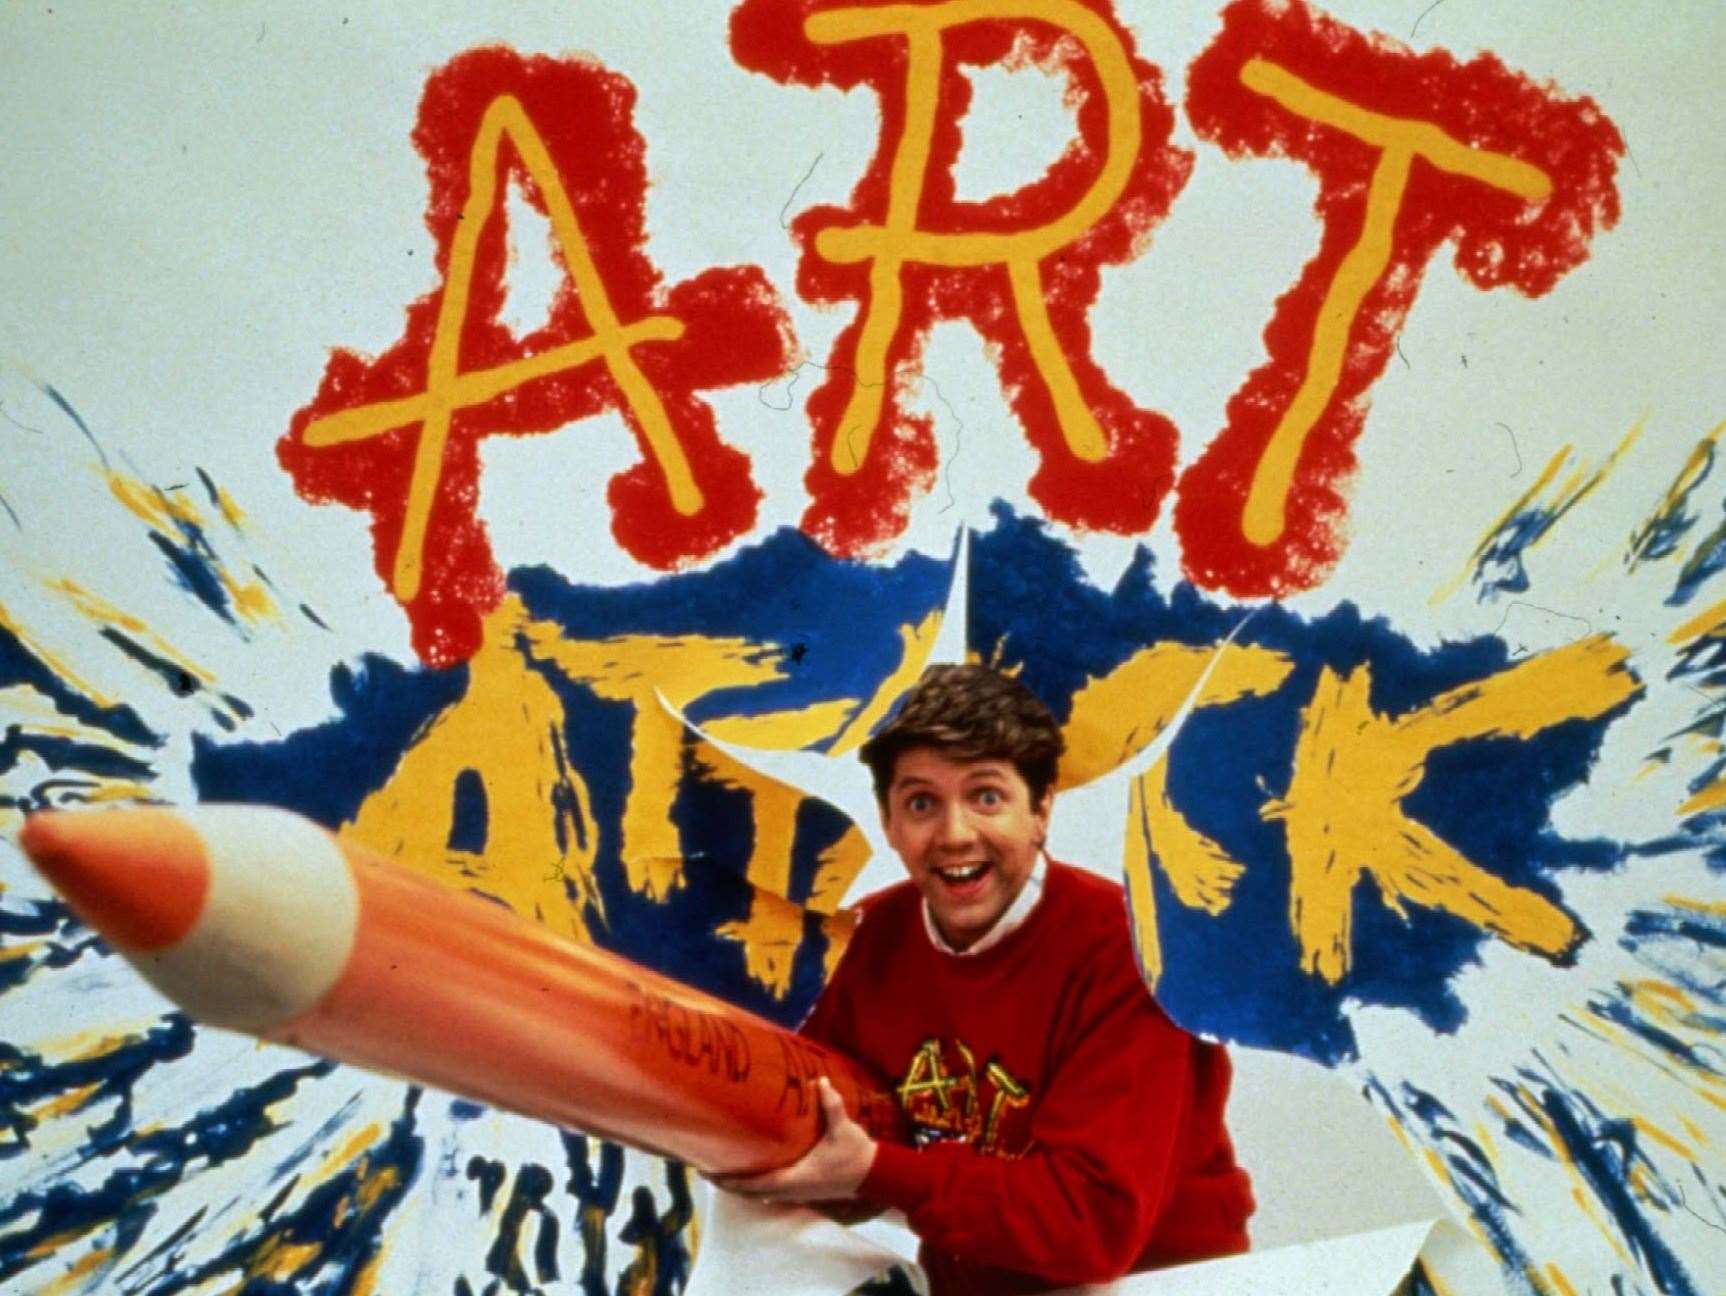 Neil Buchanan starred in Art Attack. Picture: ITV